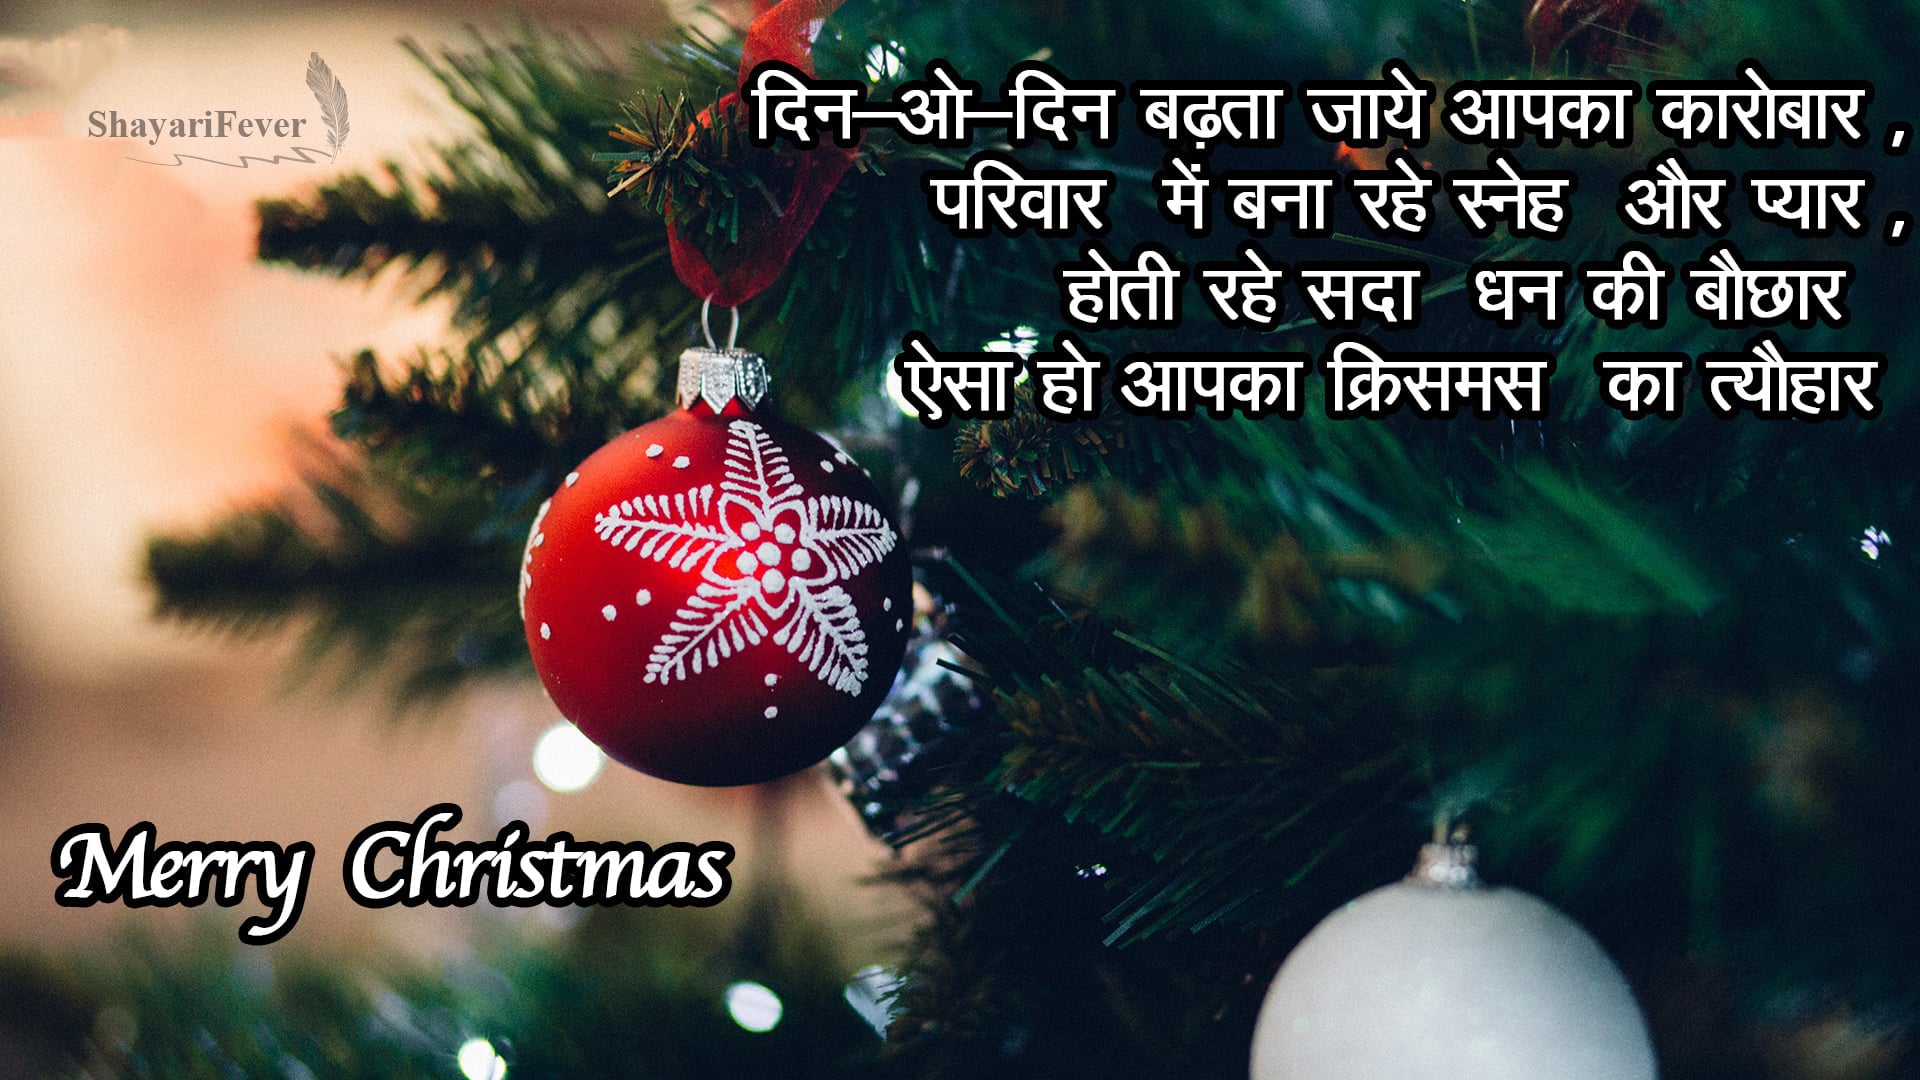 Merry Christmas Ki Shayari 2018